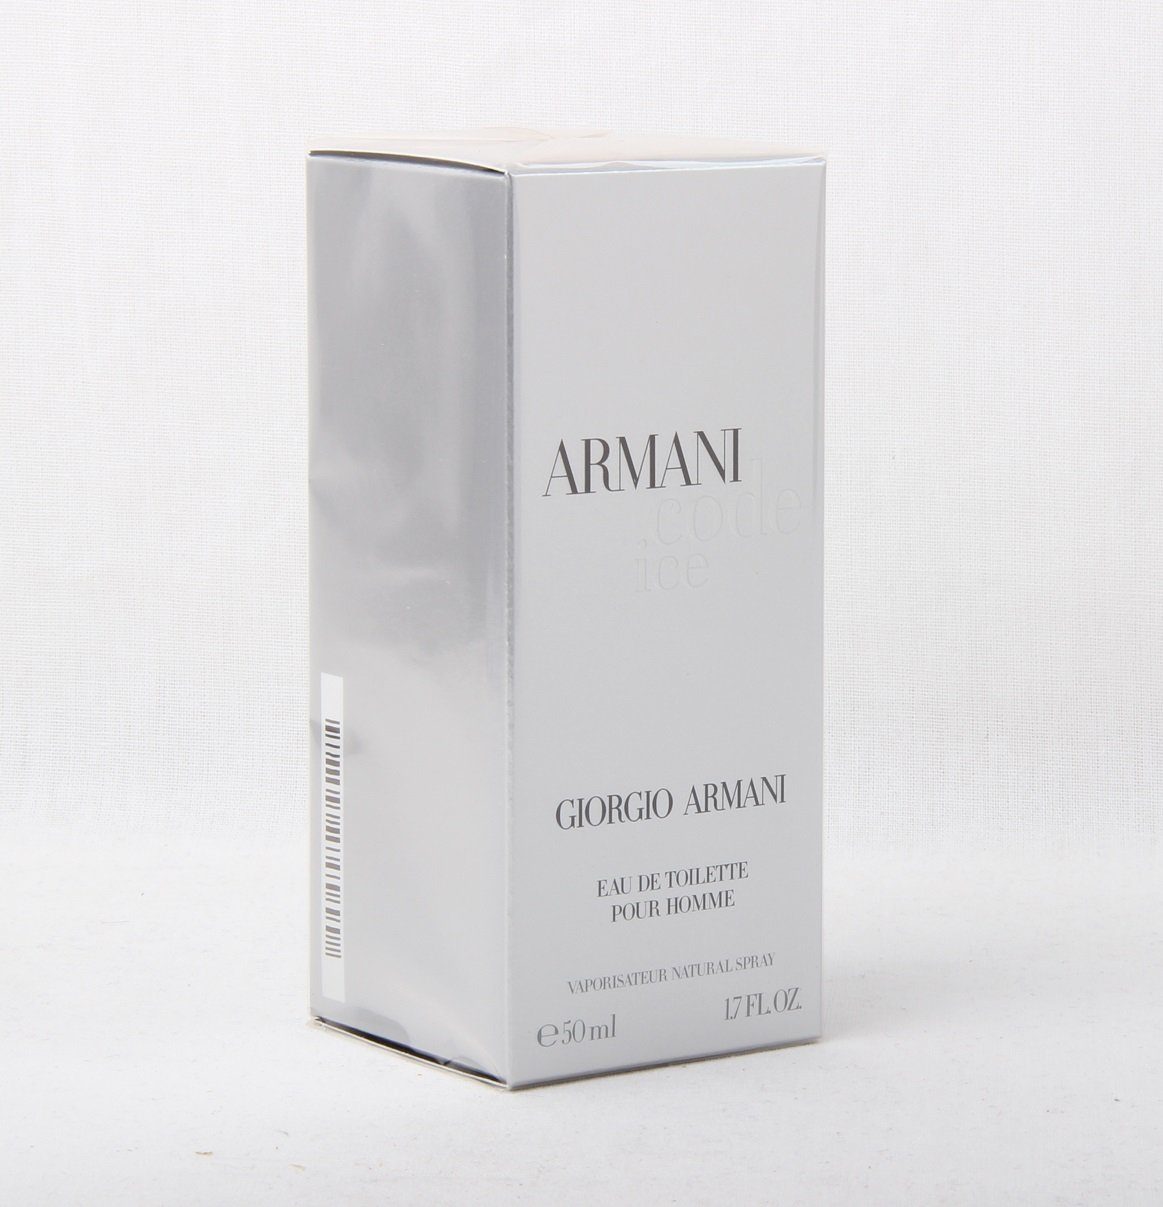 Giorgio Armani Eau de Toilette Giorgio Armani Code Ice Eau de Toilette Pour Homme 50ml